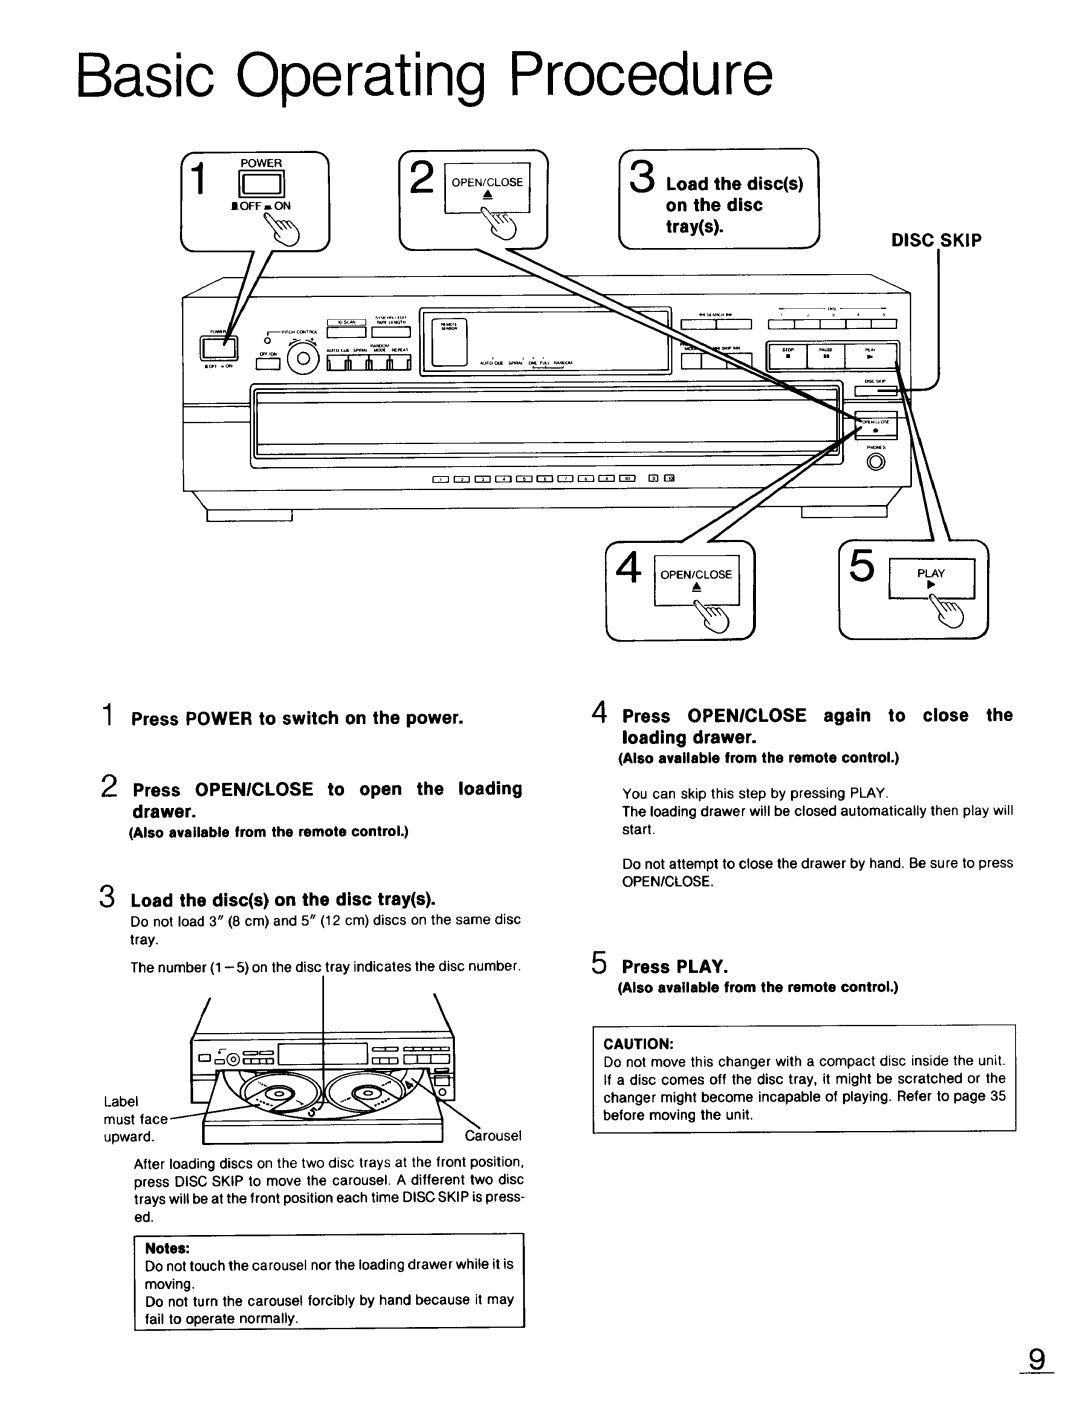 Technics SL-PD947 Basic Operating Procedure, Label, on the disc, Load the discs, trays, Disc Skip, Press PLAY 